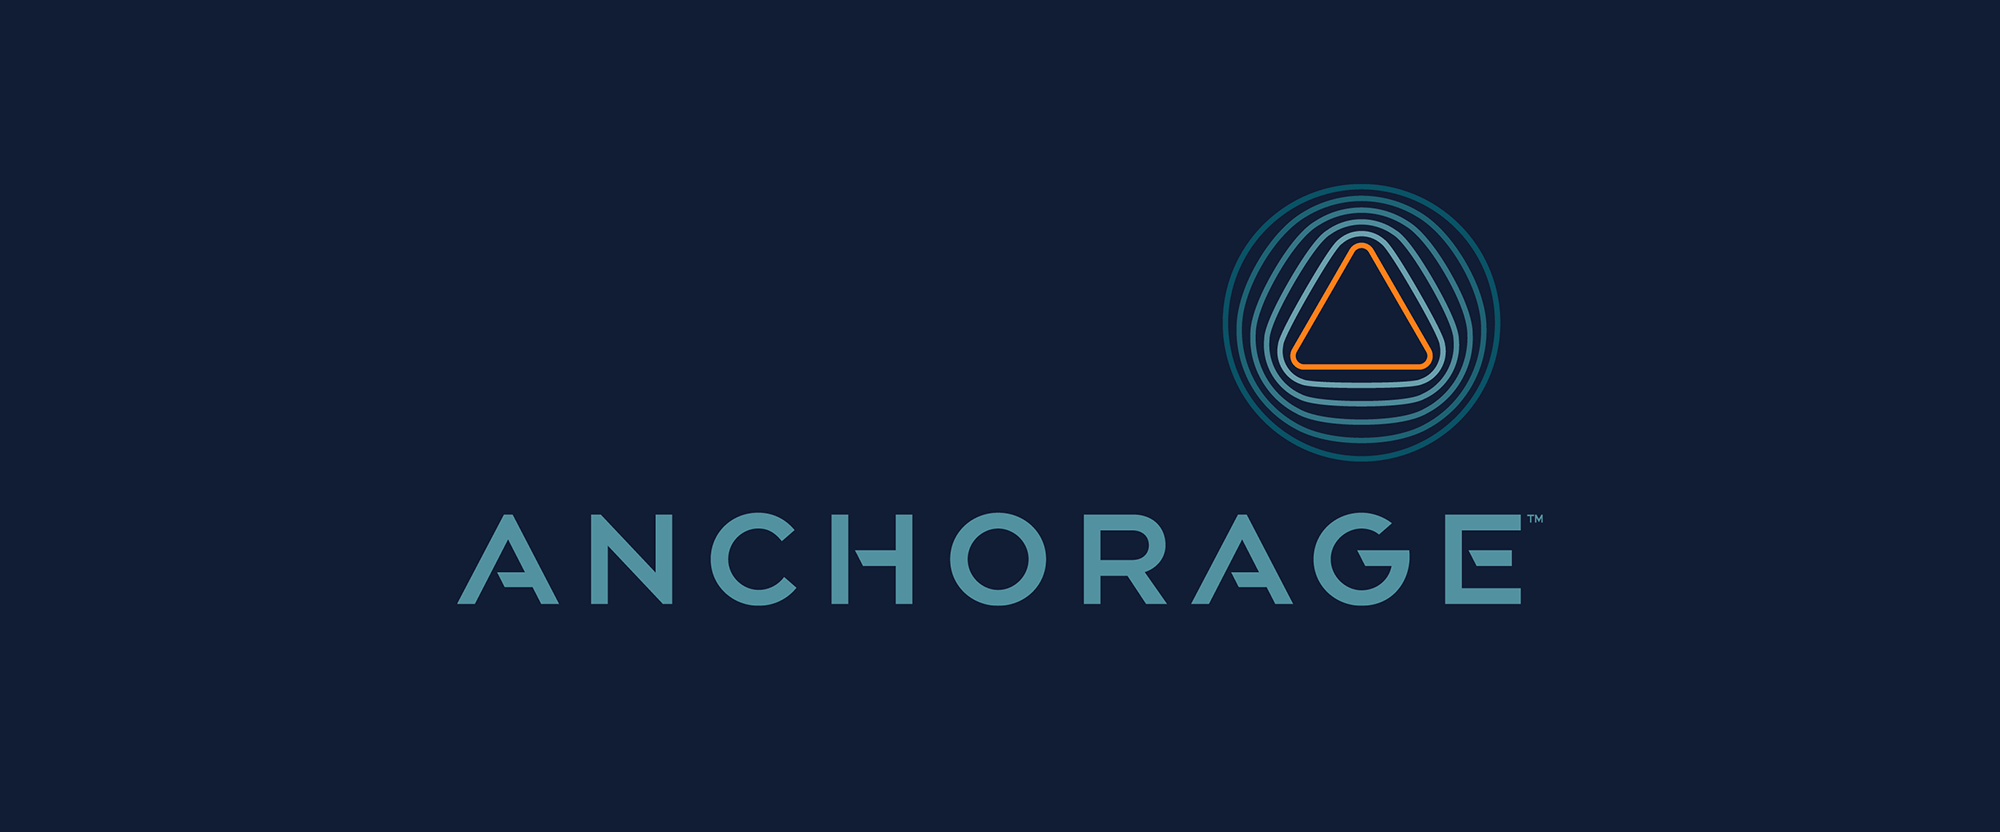 New Logo and Identity for Anchorage by Stitzlein Studio